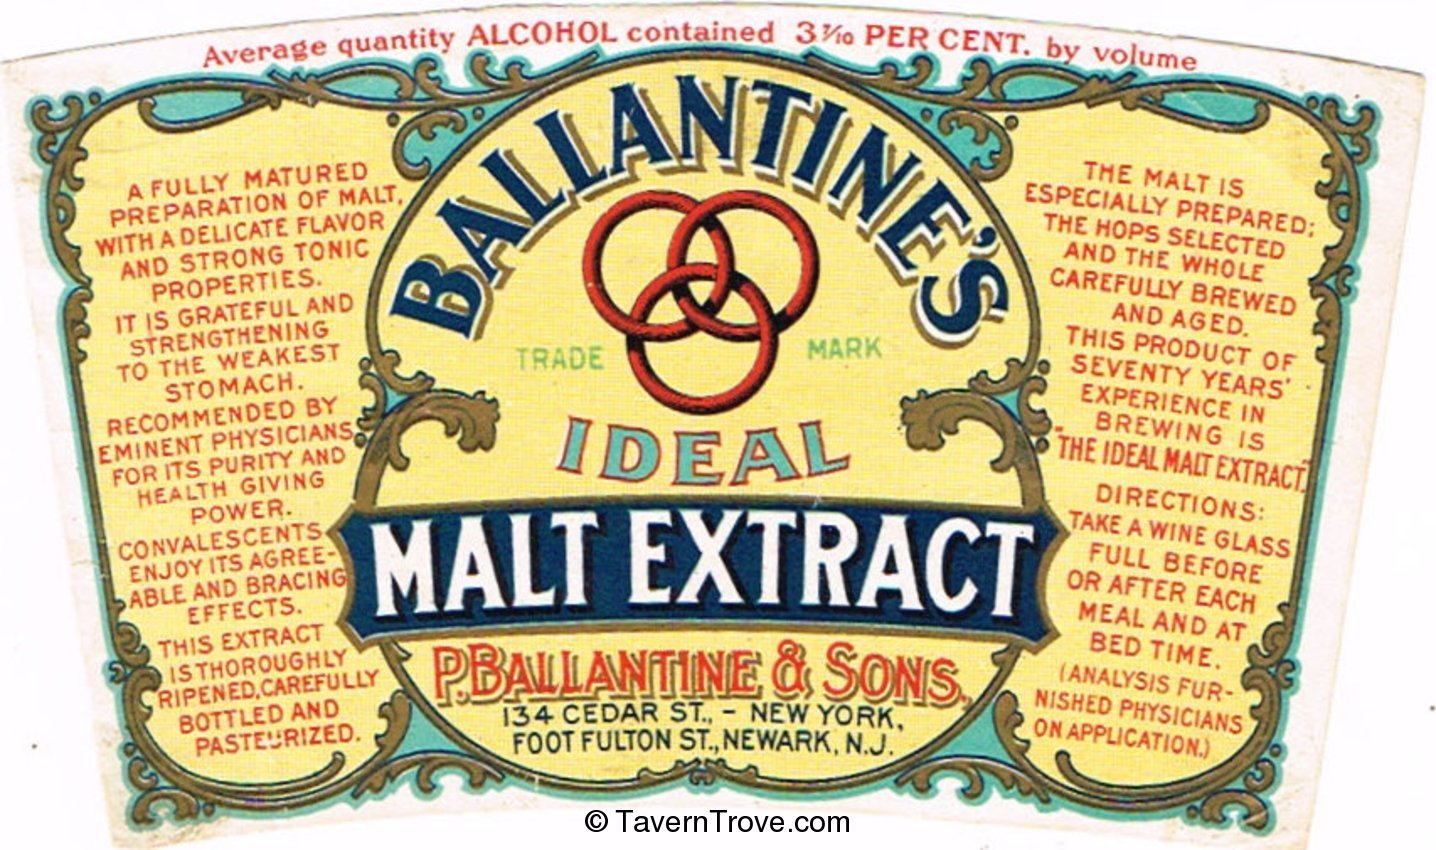 Ballantine's Ideal Malt Extract